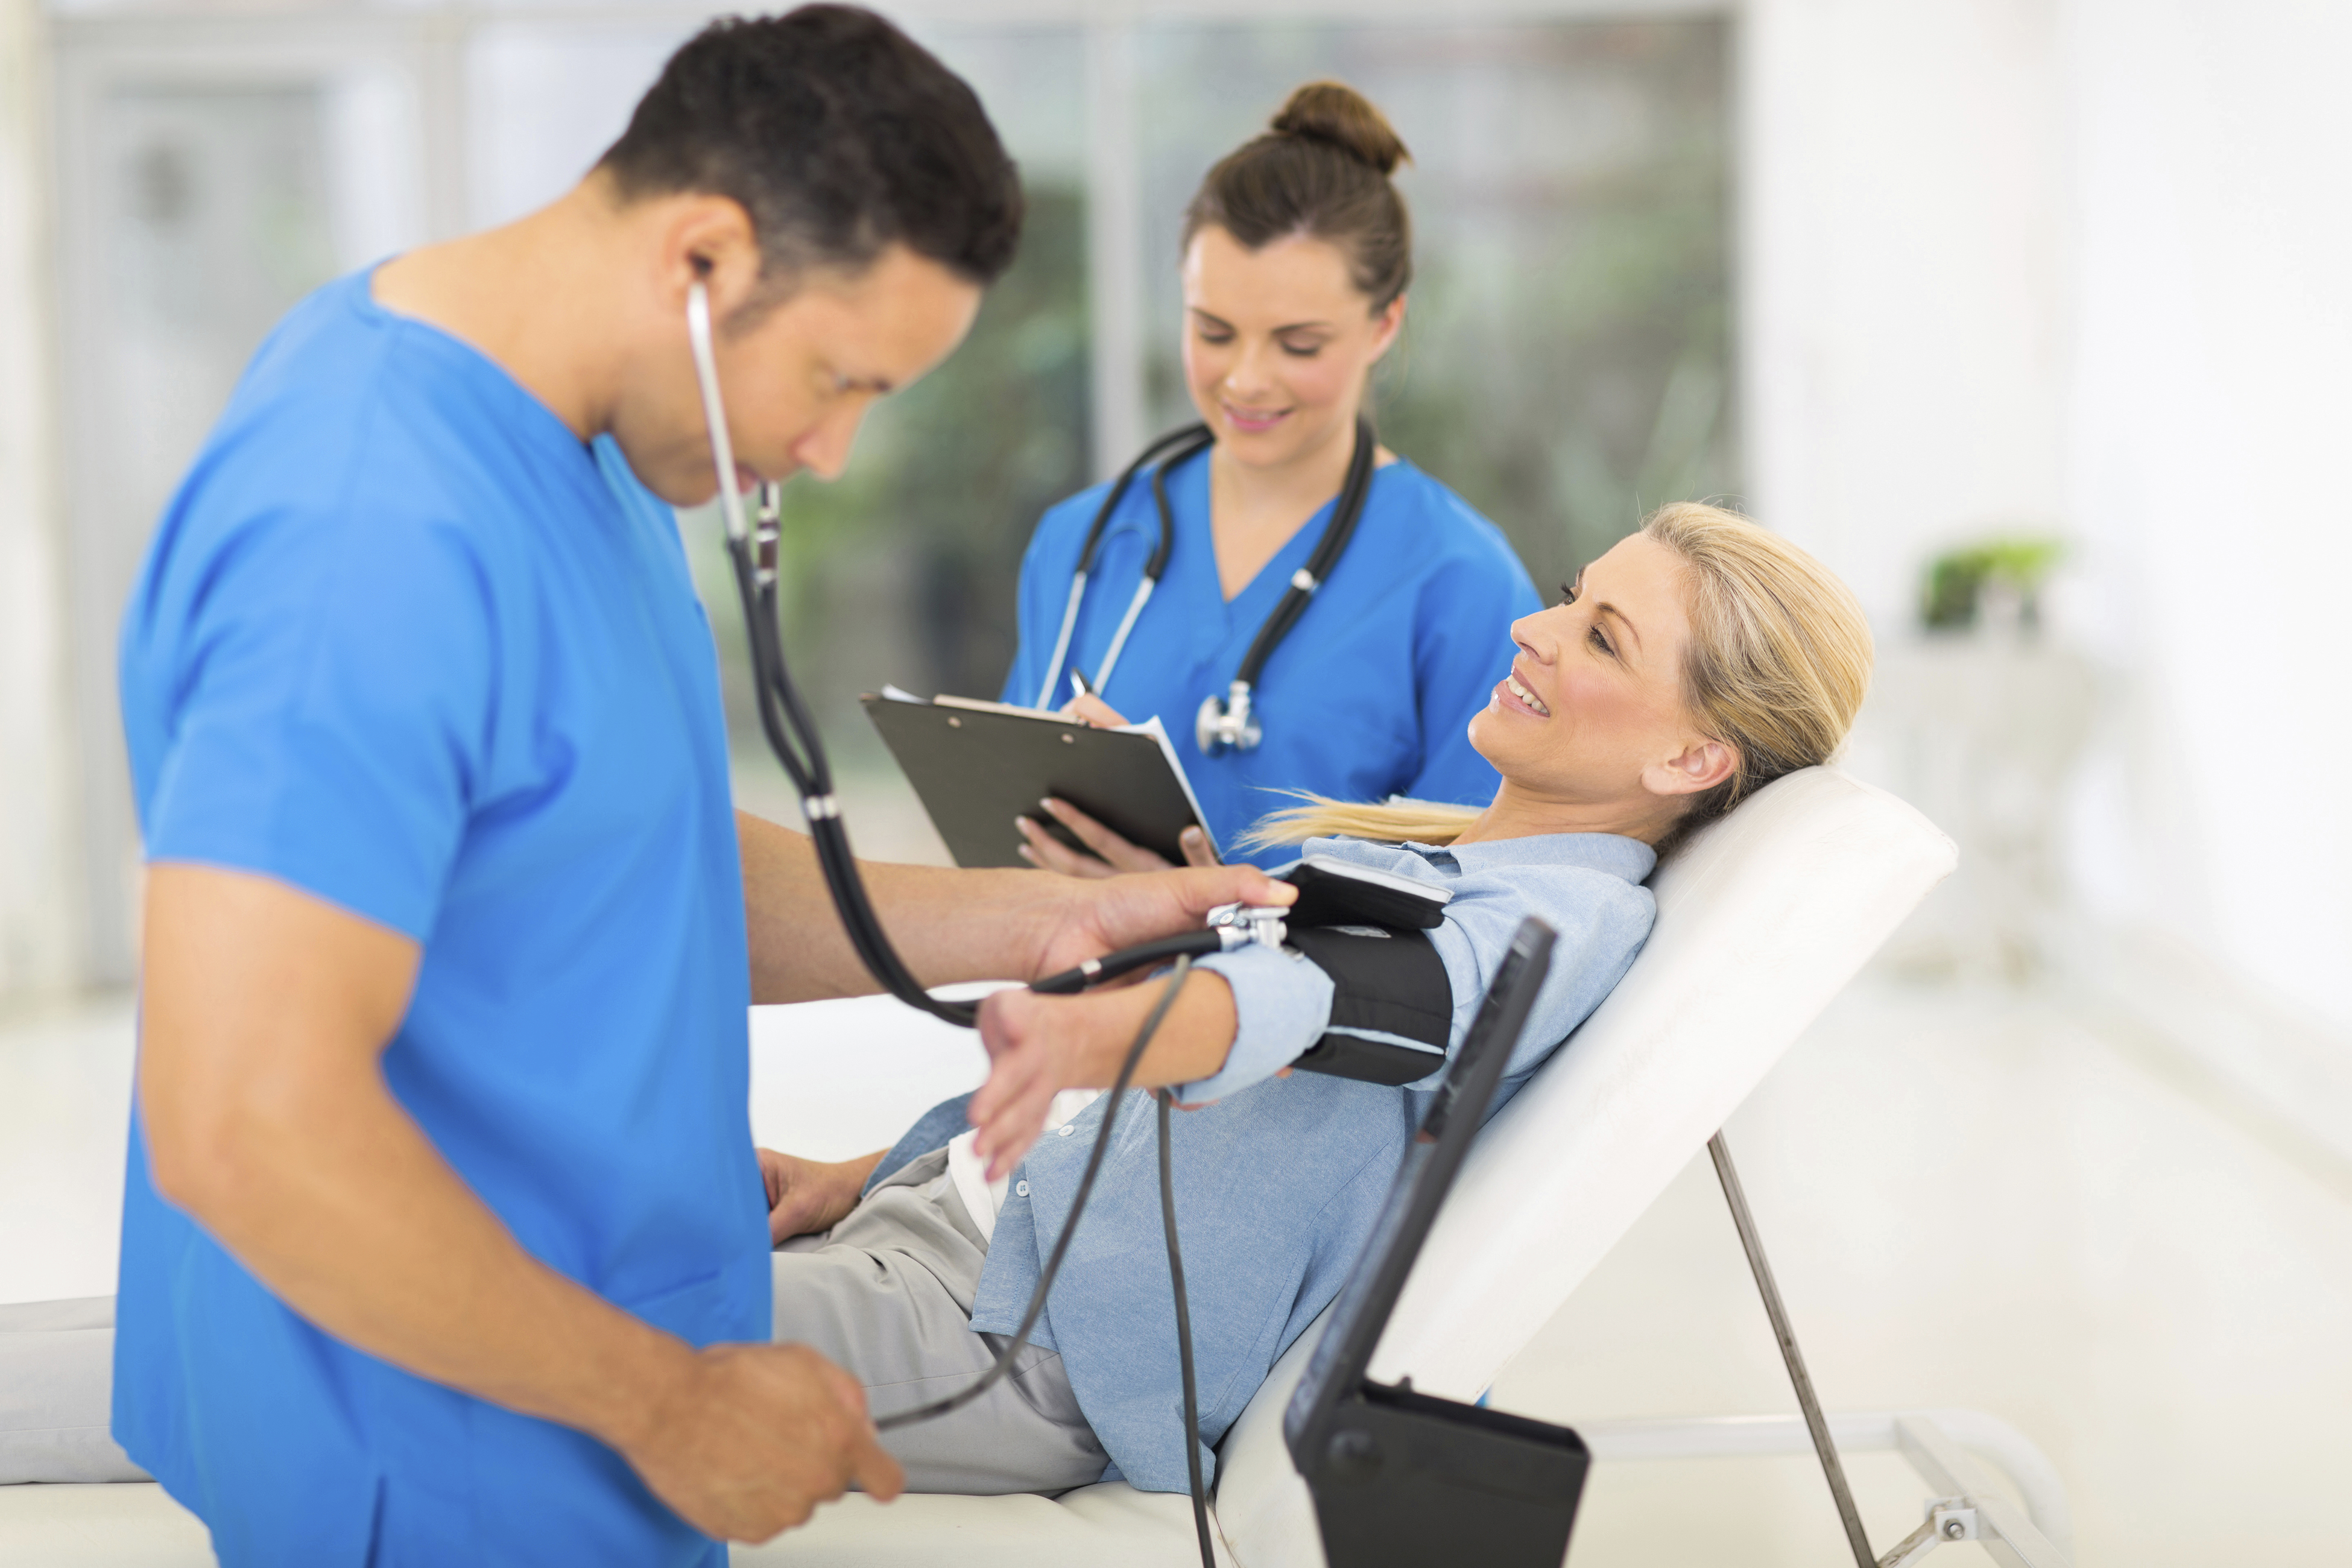 Pennsylvania Travel Nursing Jobs Call Millenia Medical Staffing 888-686-6877